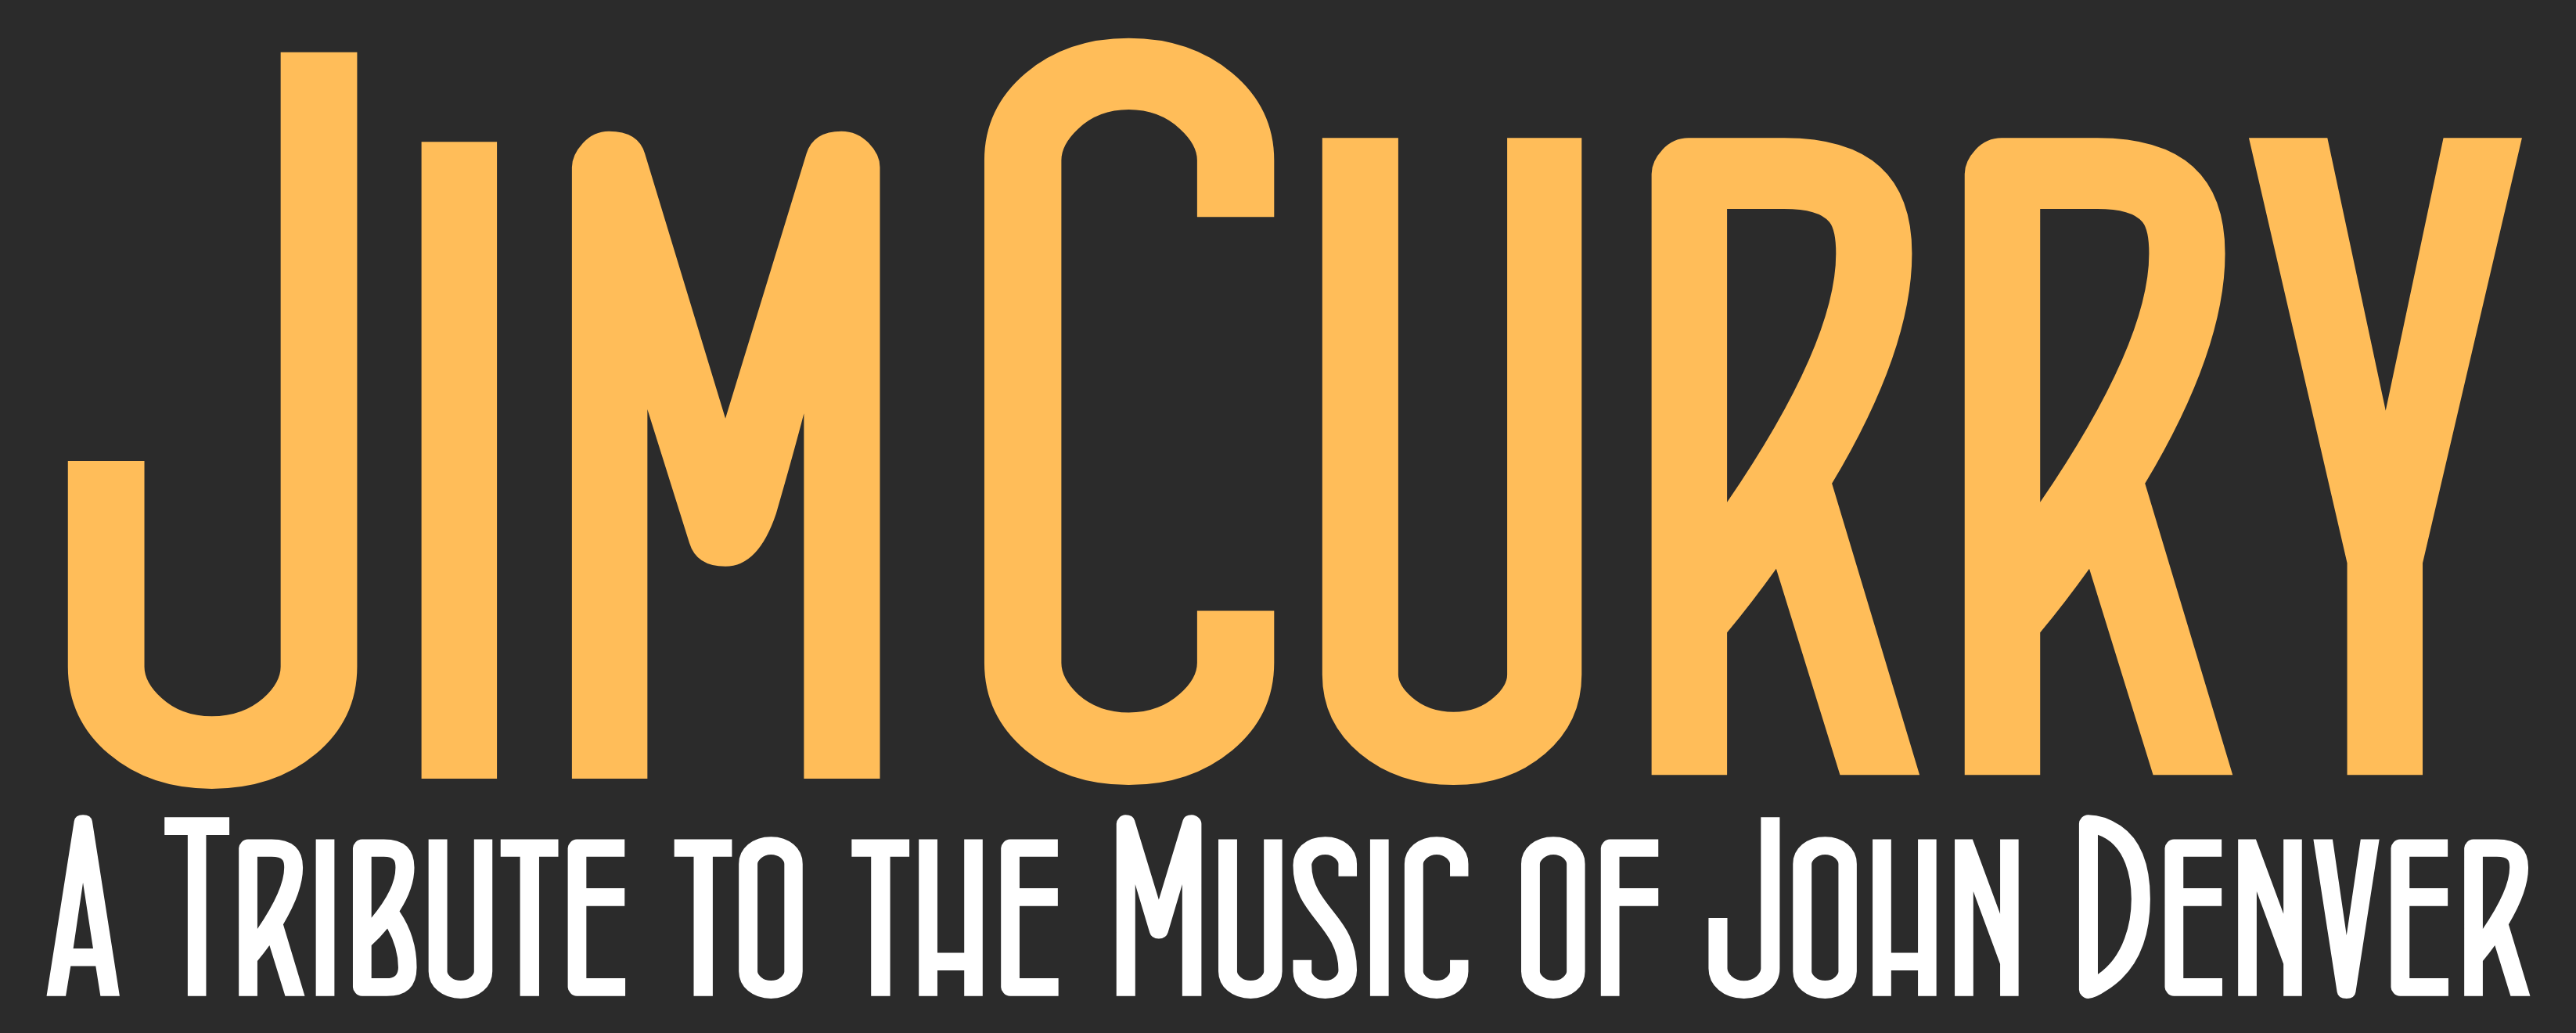 John Denver Tribute artist Jim Curry